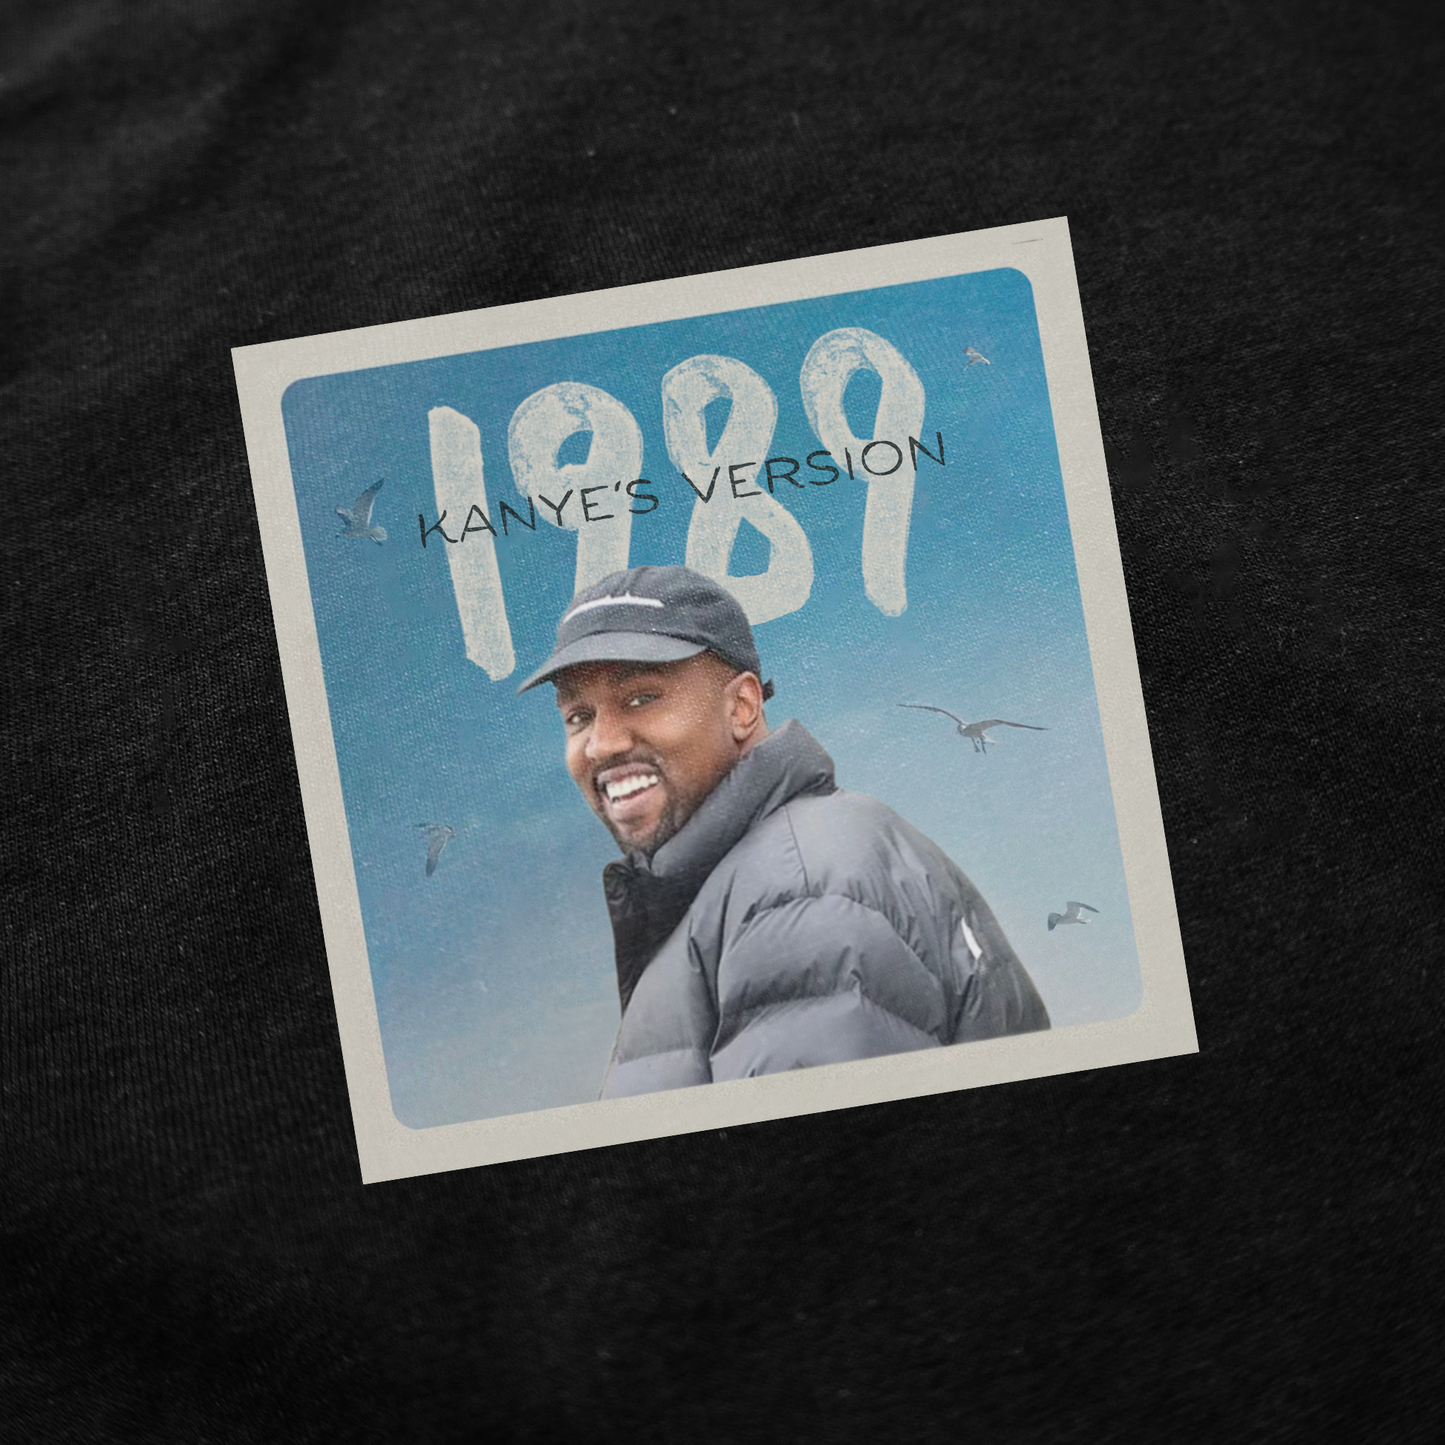 1989 Kanye's Version T-Shirt